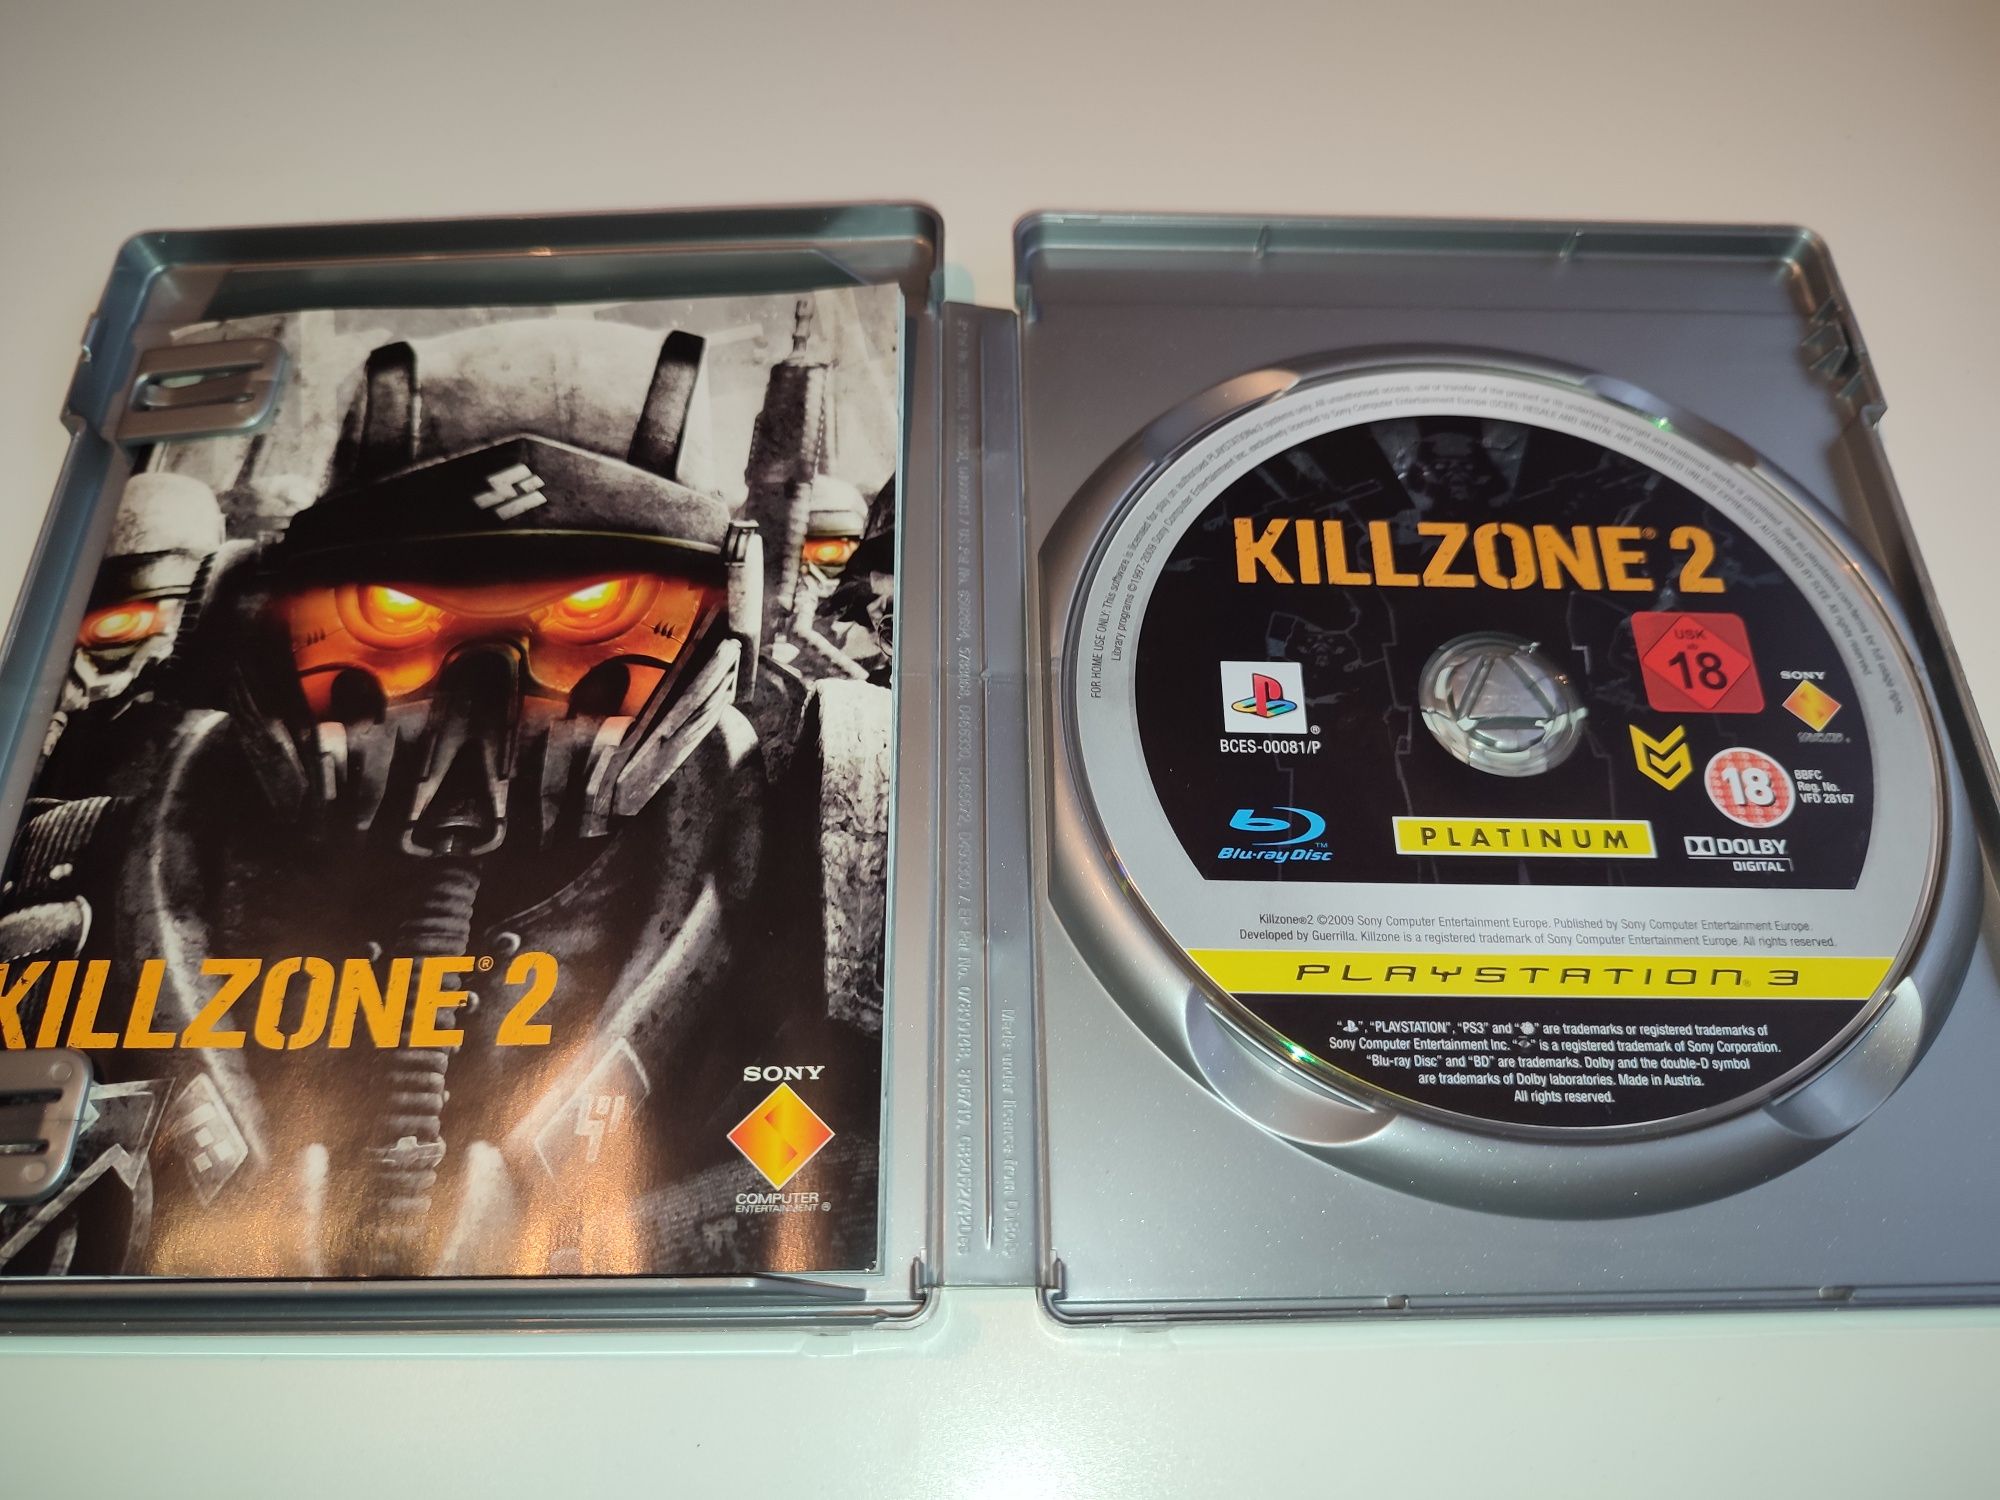 Gra Ps3 Killzone 2 II gry PlayStation 3 Hit Toy Story Minecraft